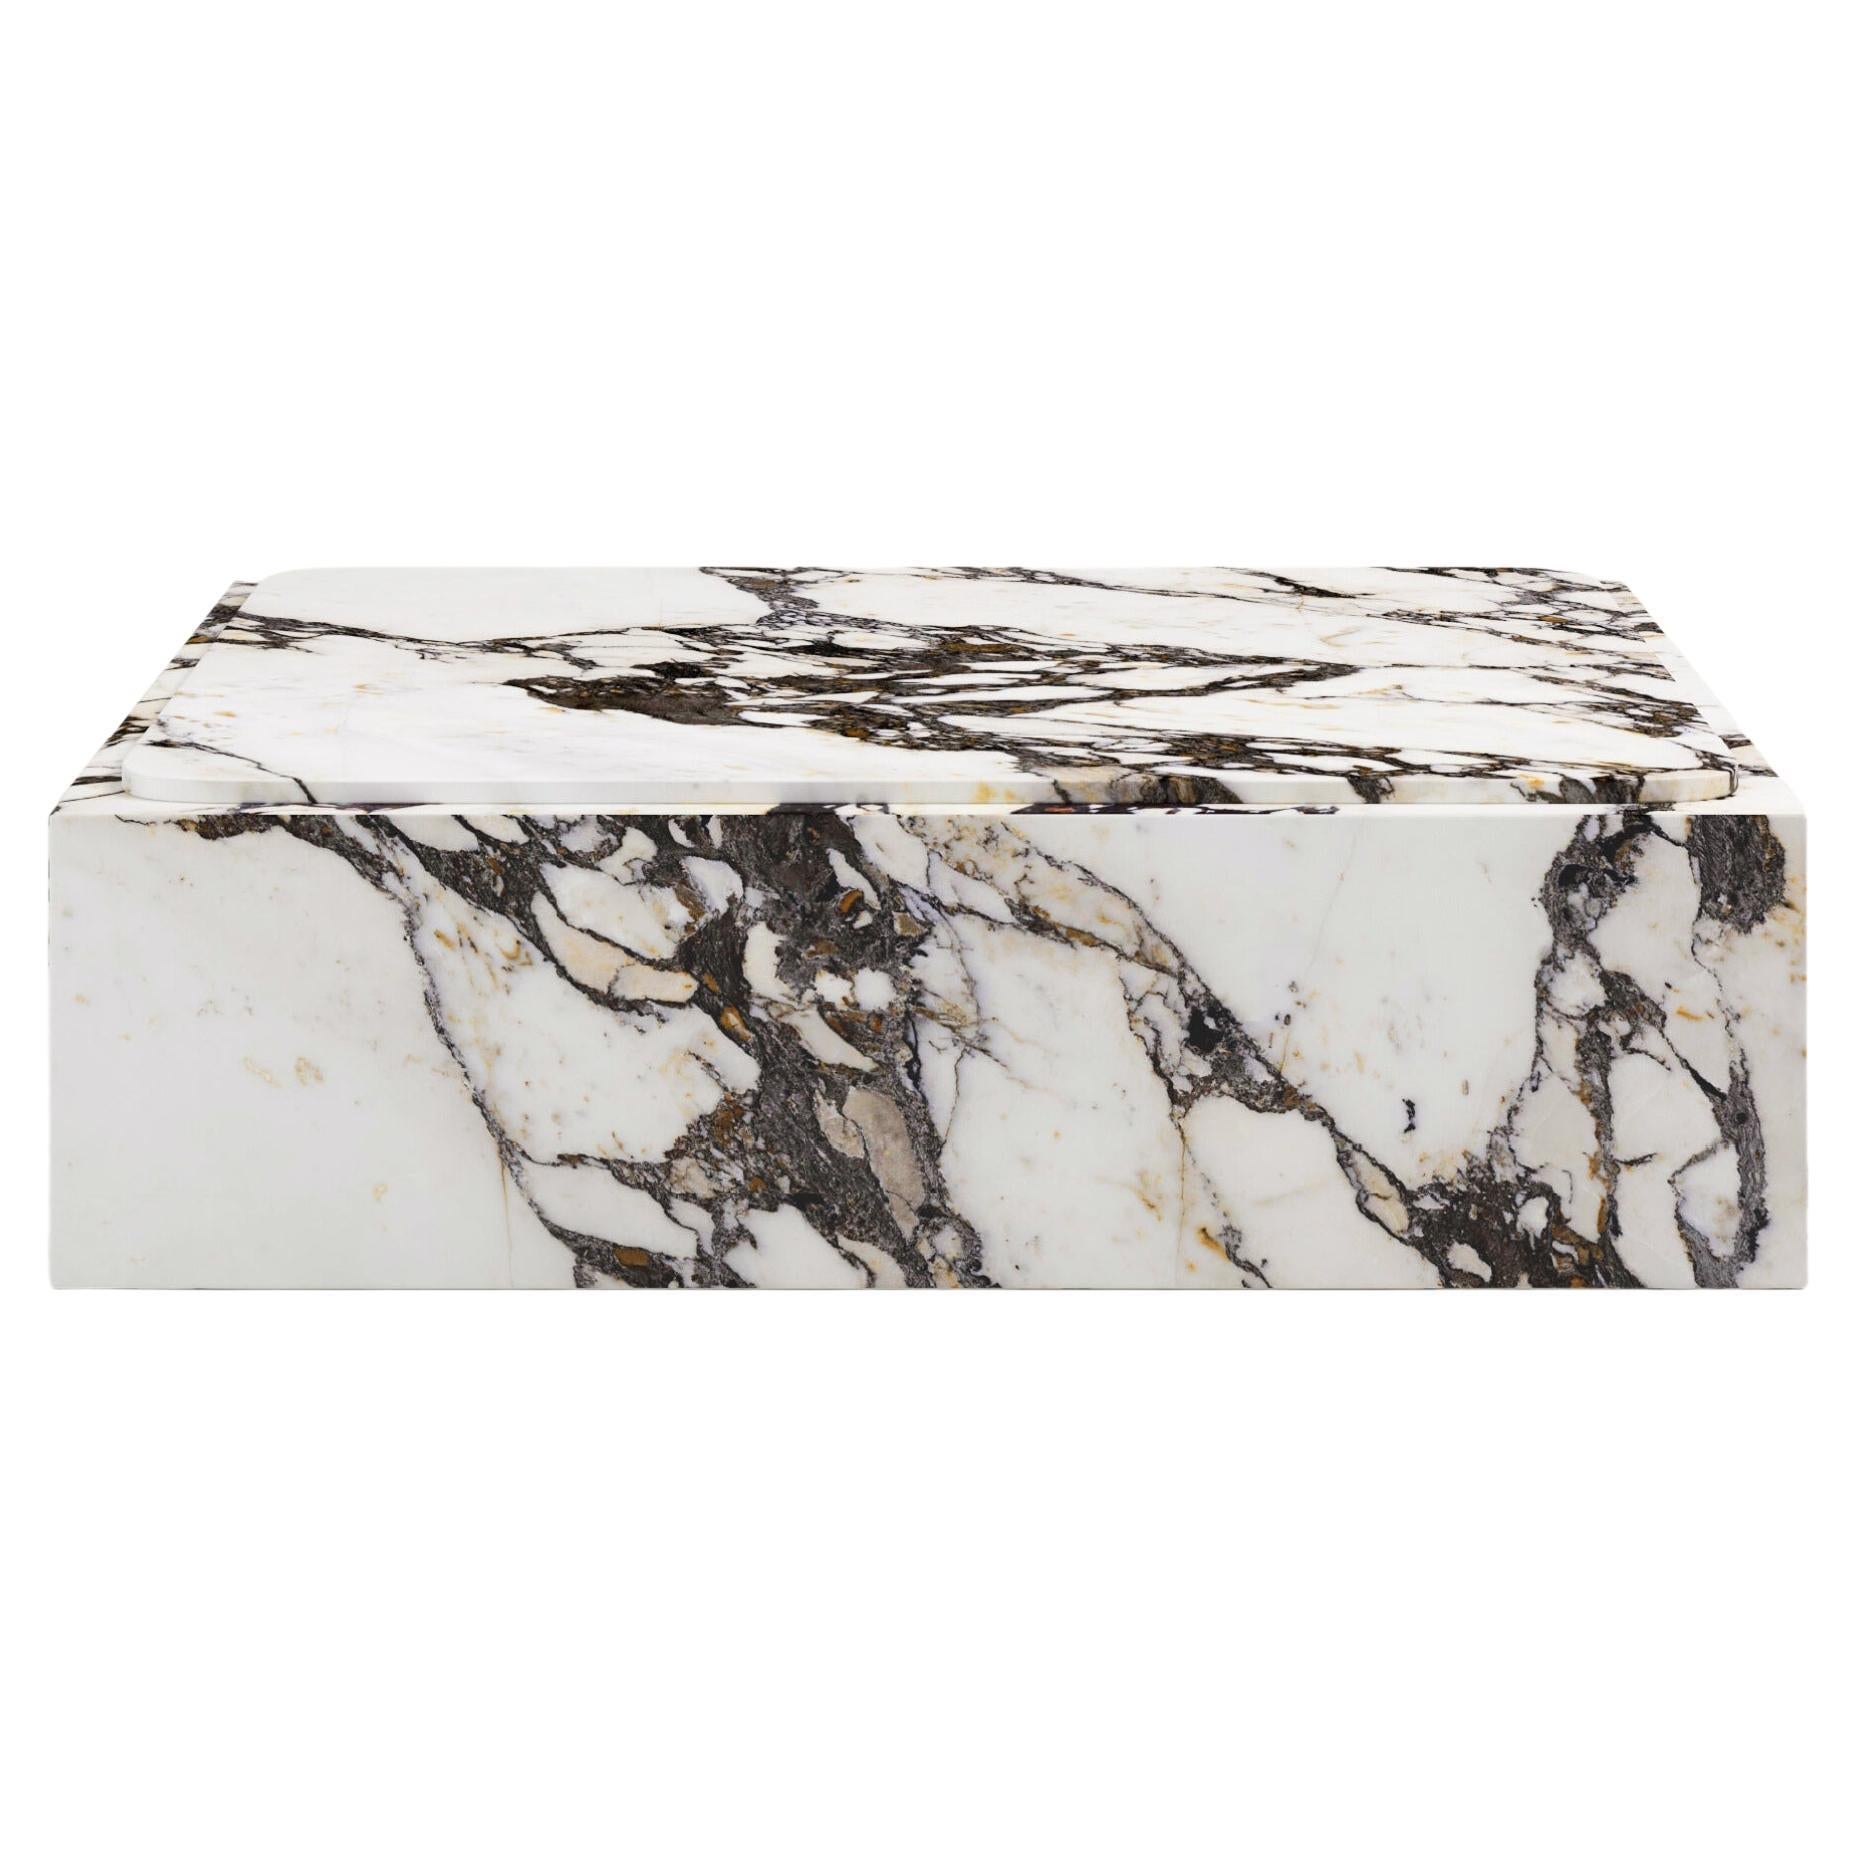 FORM(LA) Cubo Square Plinth Coffee Table 60”L x 60”W x 13”H Calacatta Marble